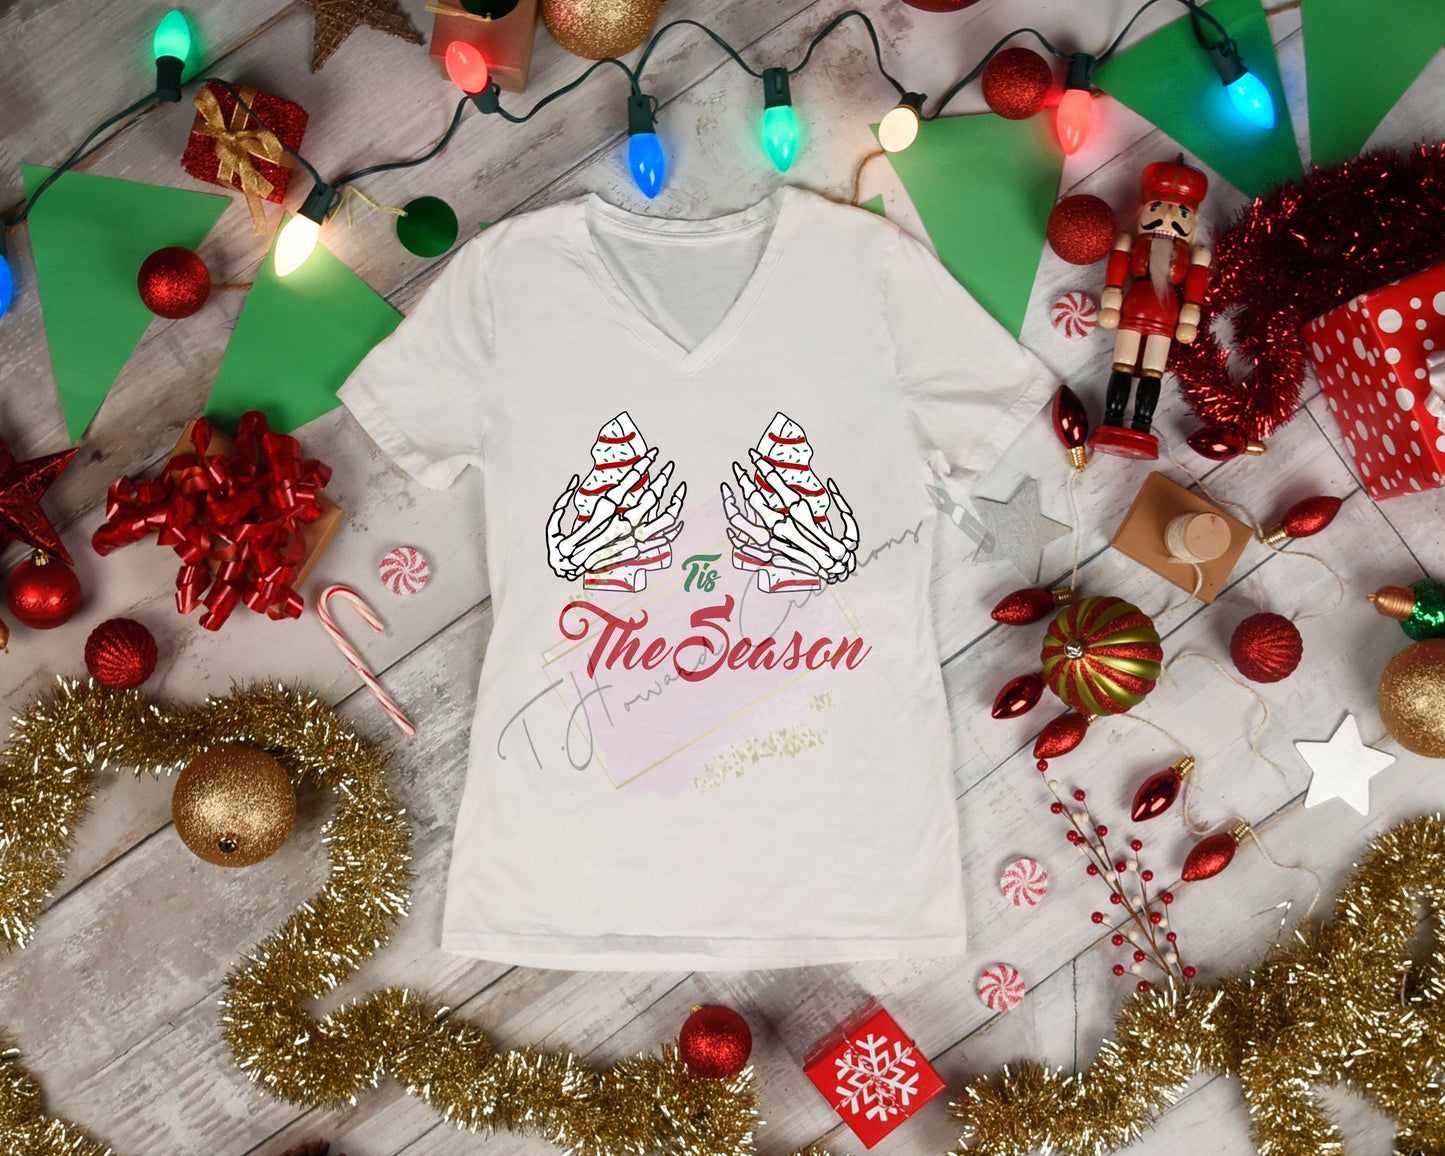 Little Debbie (hands on trees)Tis the season Christmas Shirt